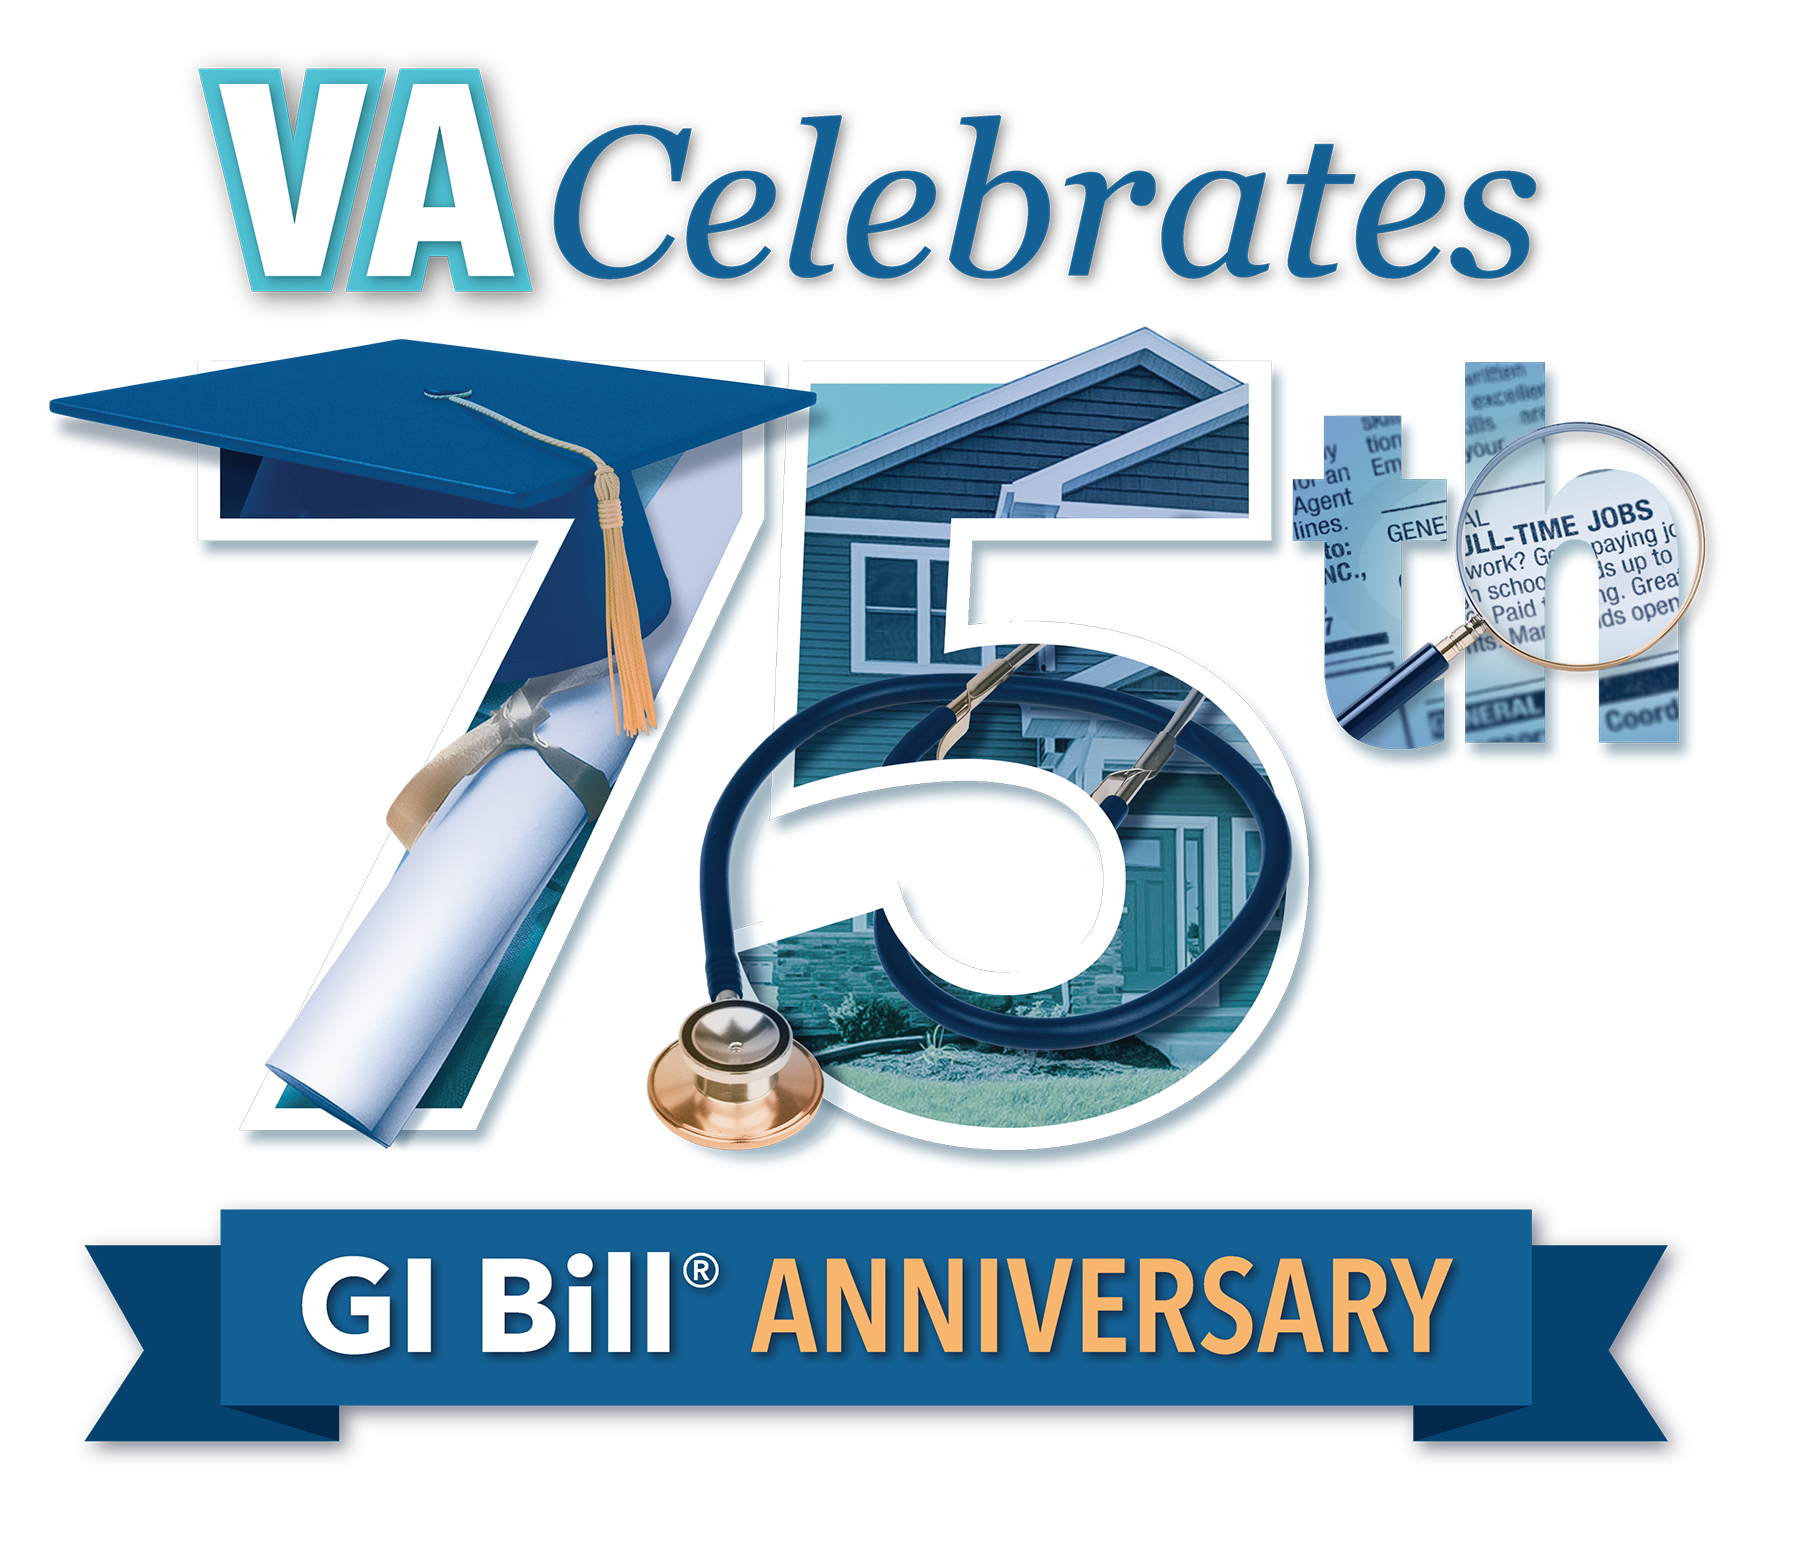 VA celebrates 75th GI Bill anniversary